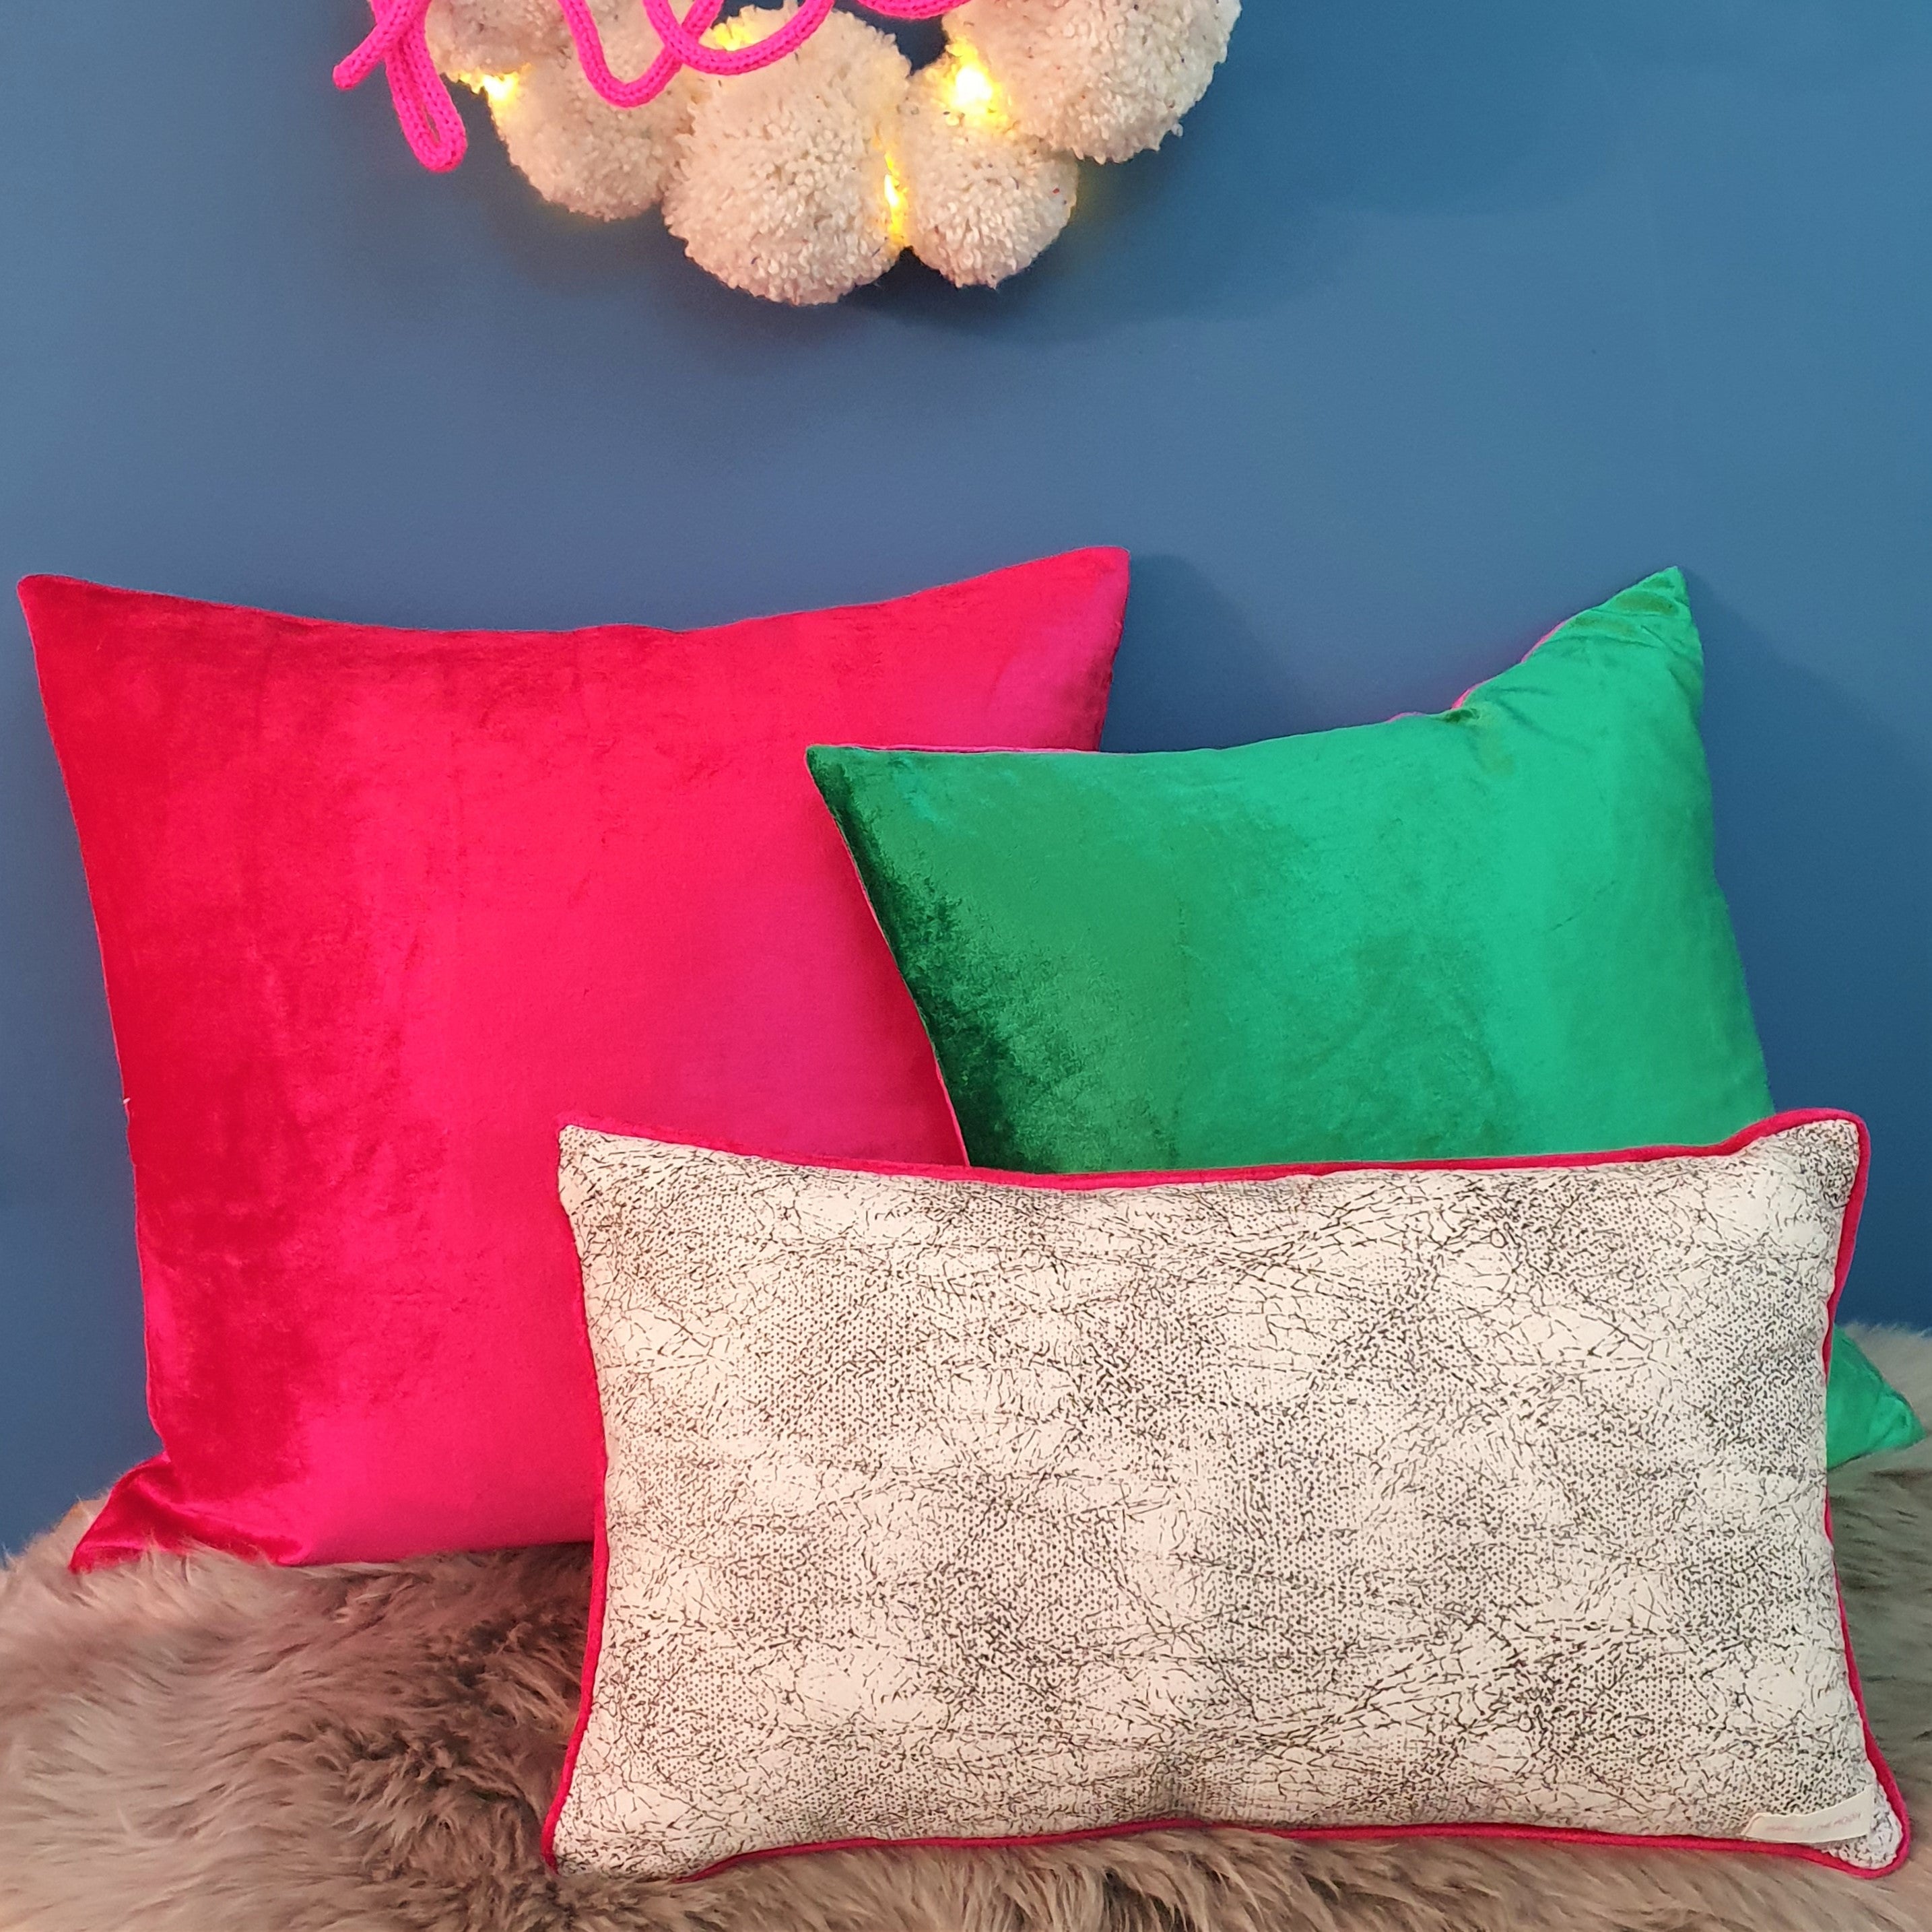 Abstract animal print velvet cushion with shocking pink velvet piping